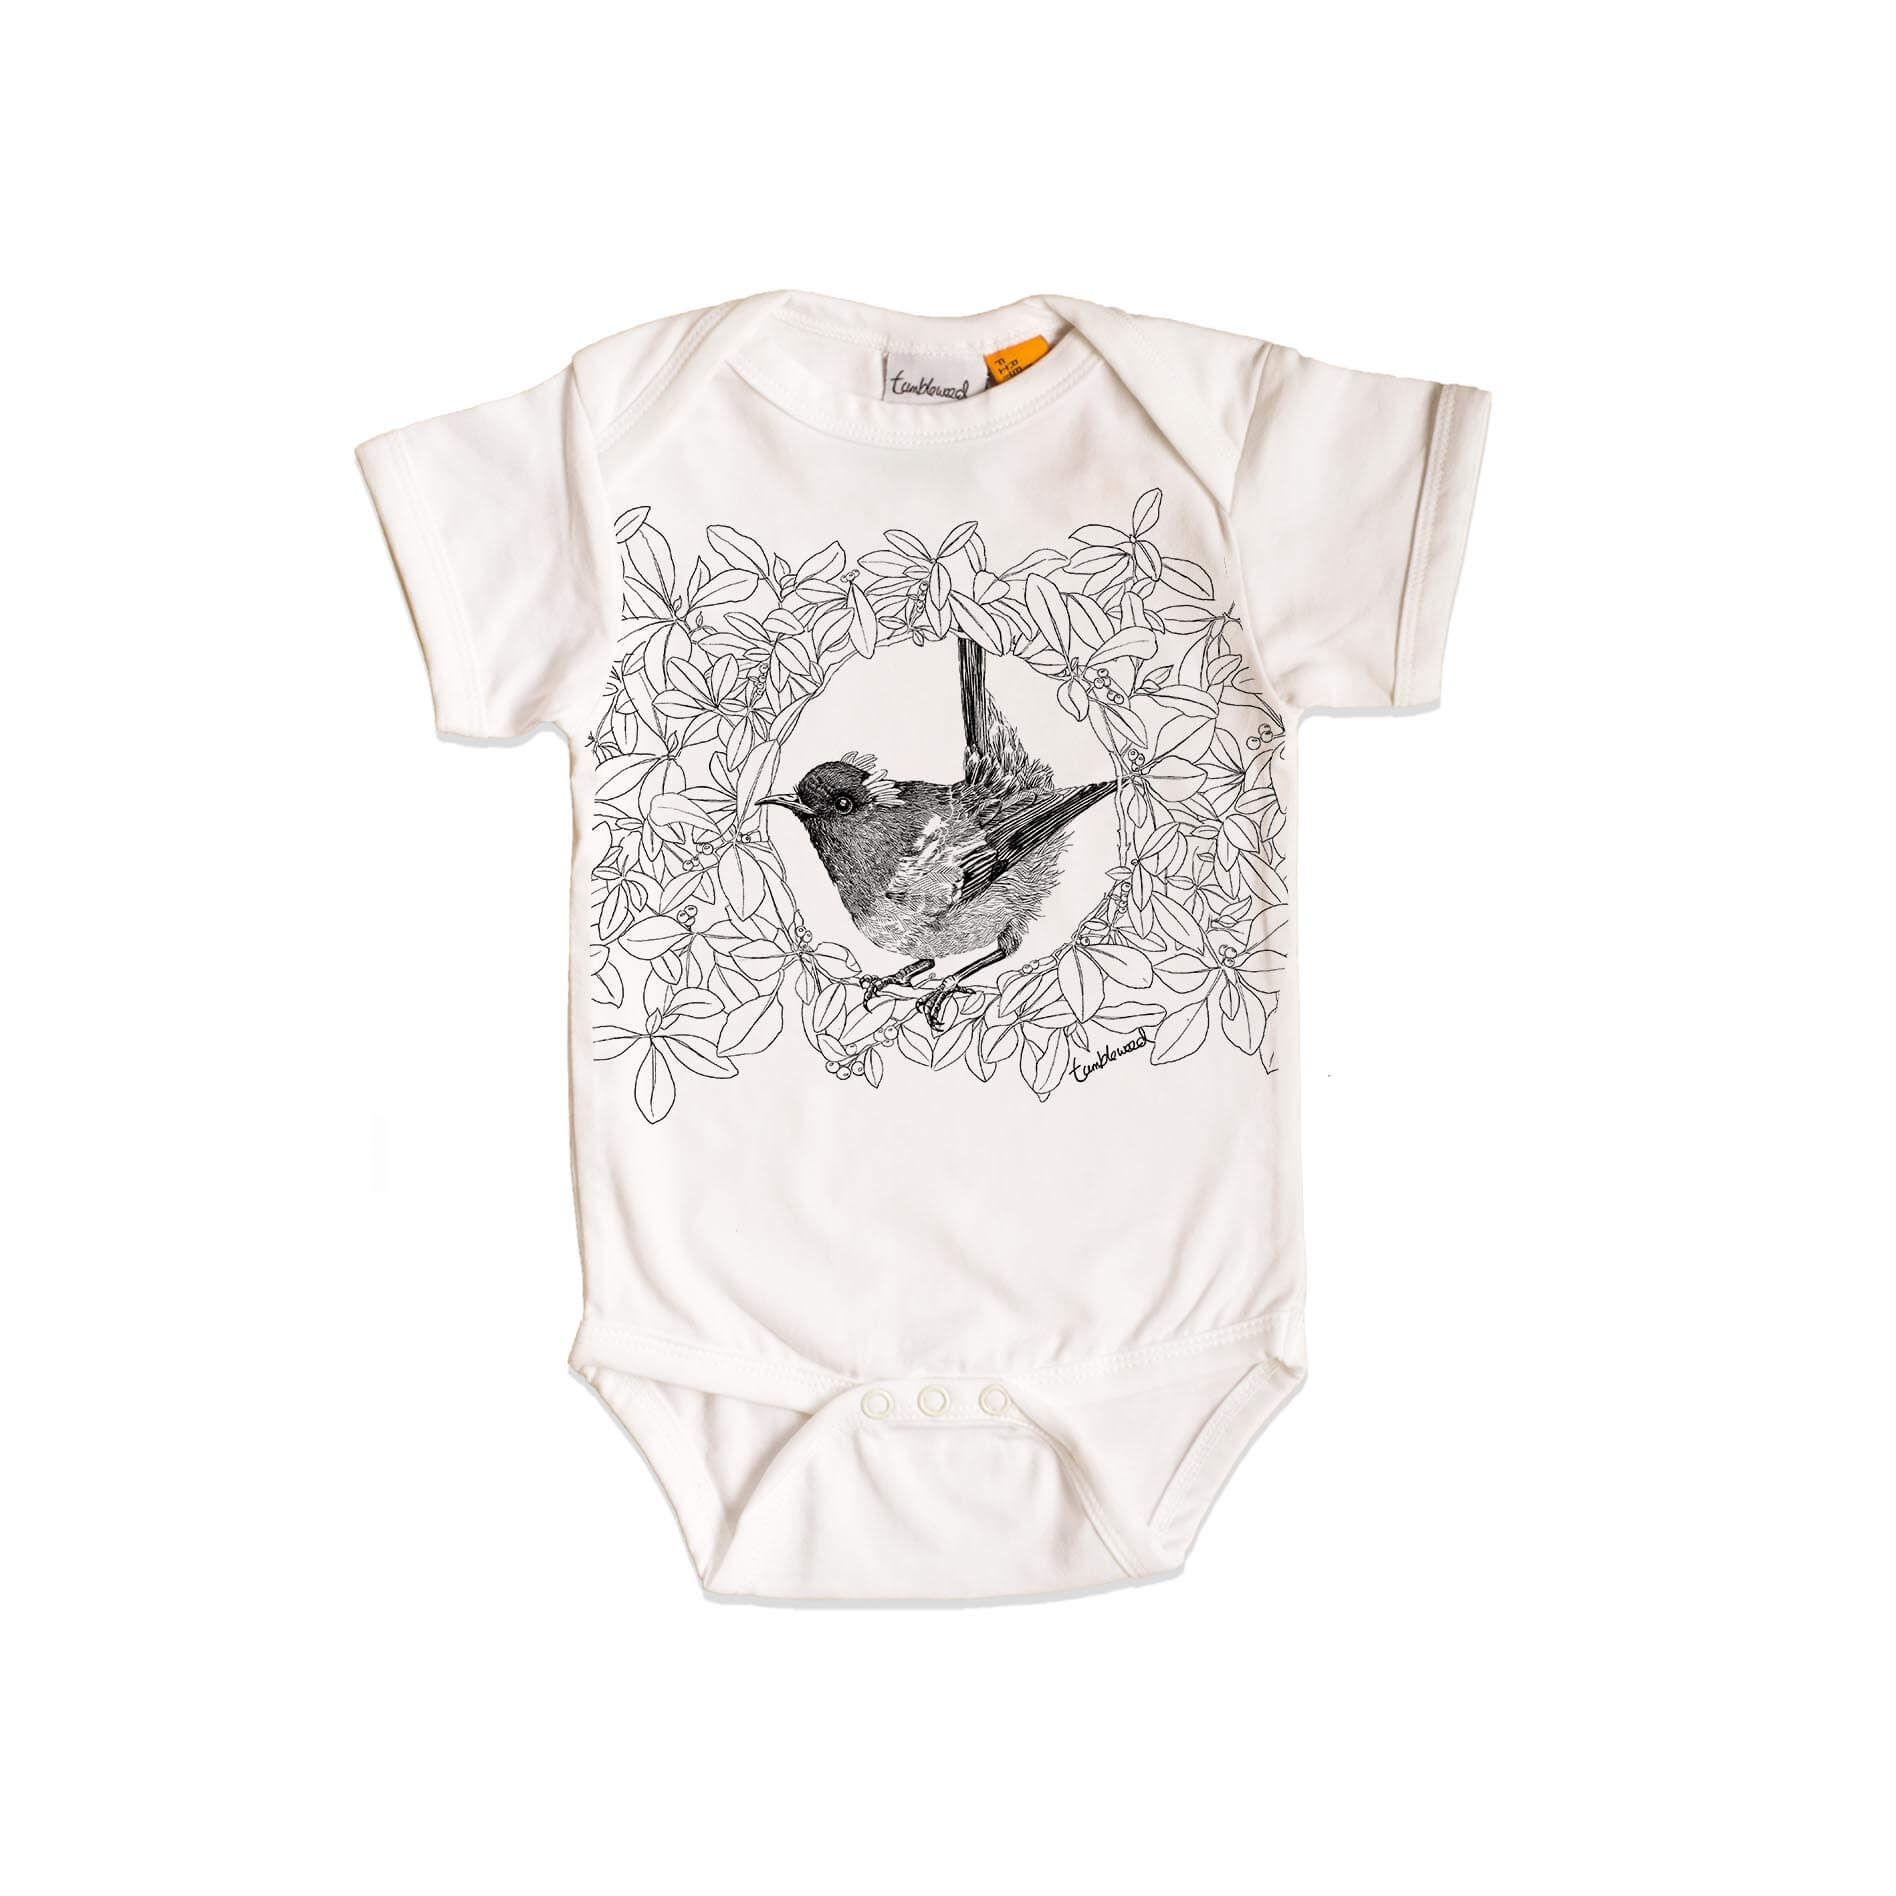 Short sleeved, white, organic cotton, baby onesie featuring a screen printed Hihi/Stitchbird design.